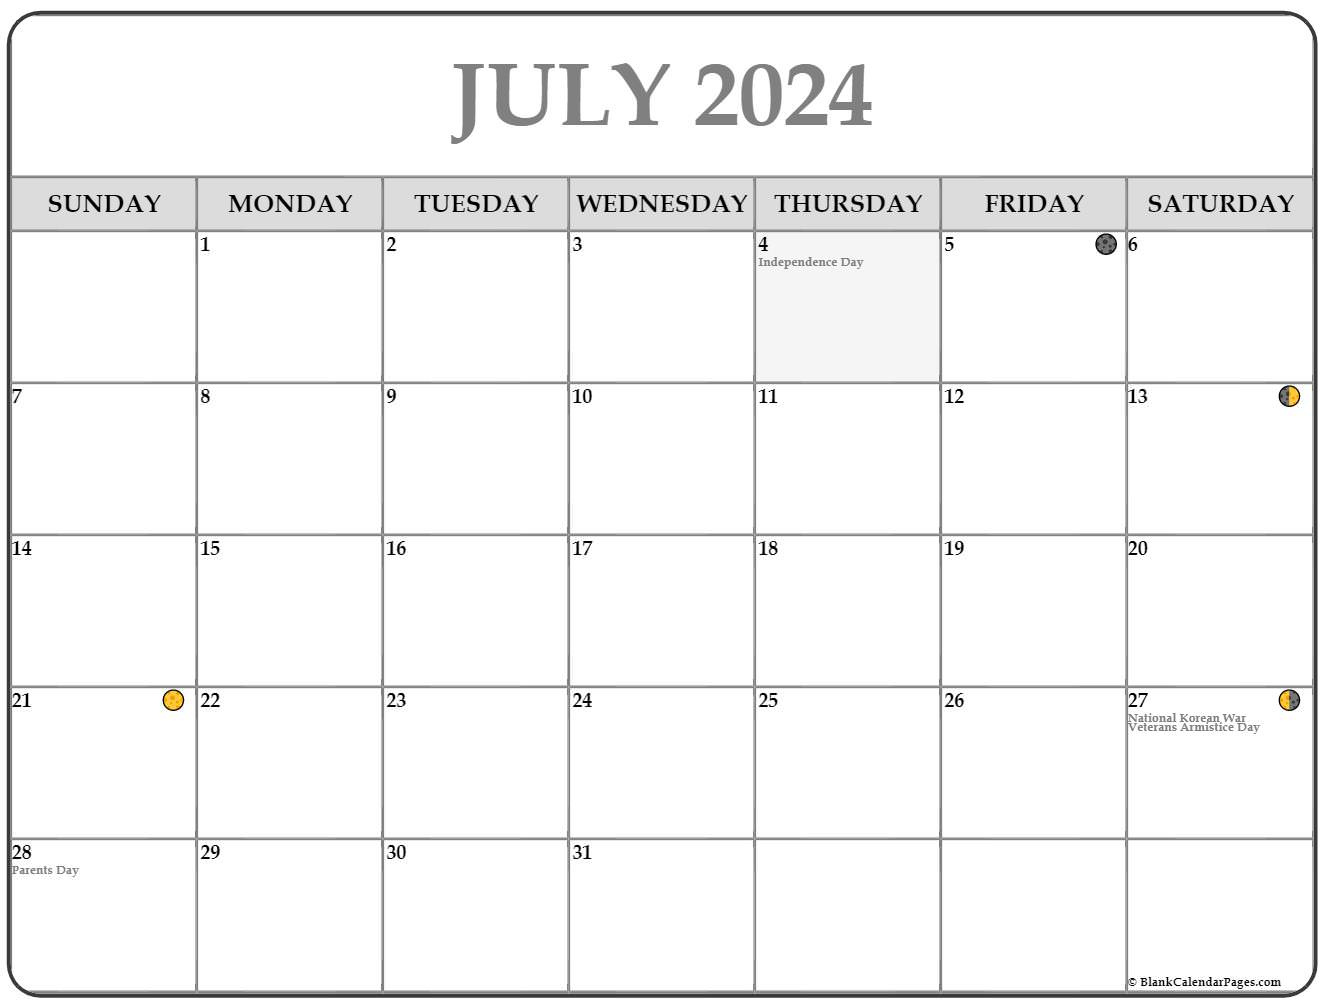 July 2024 Lunar Calendar | Moon Phase Calendar pertaining to Calendar Moon July 2024